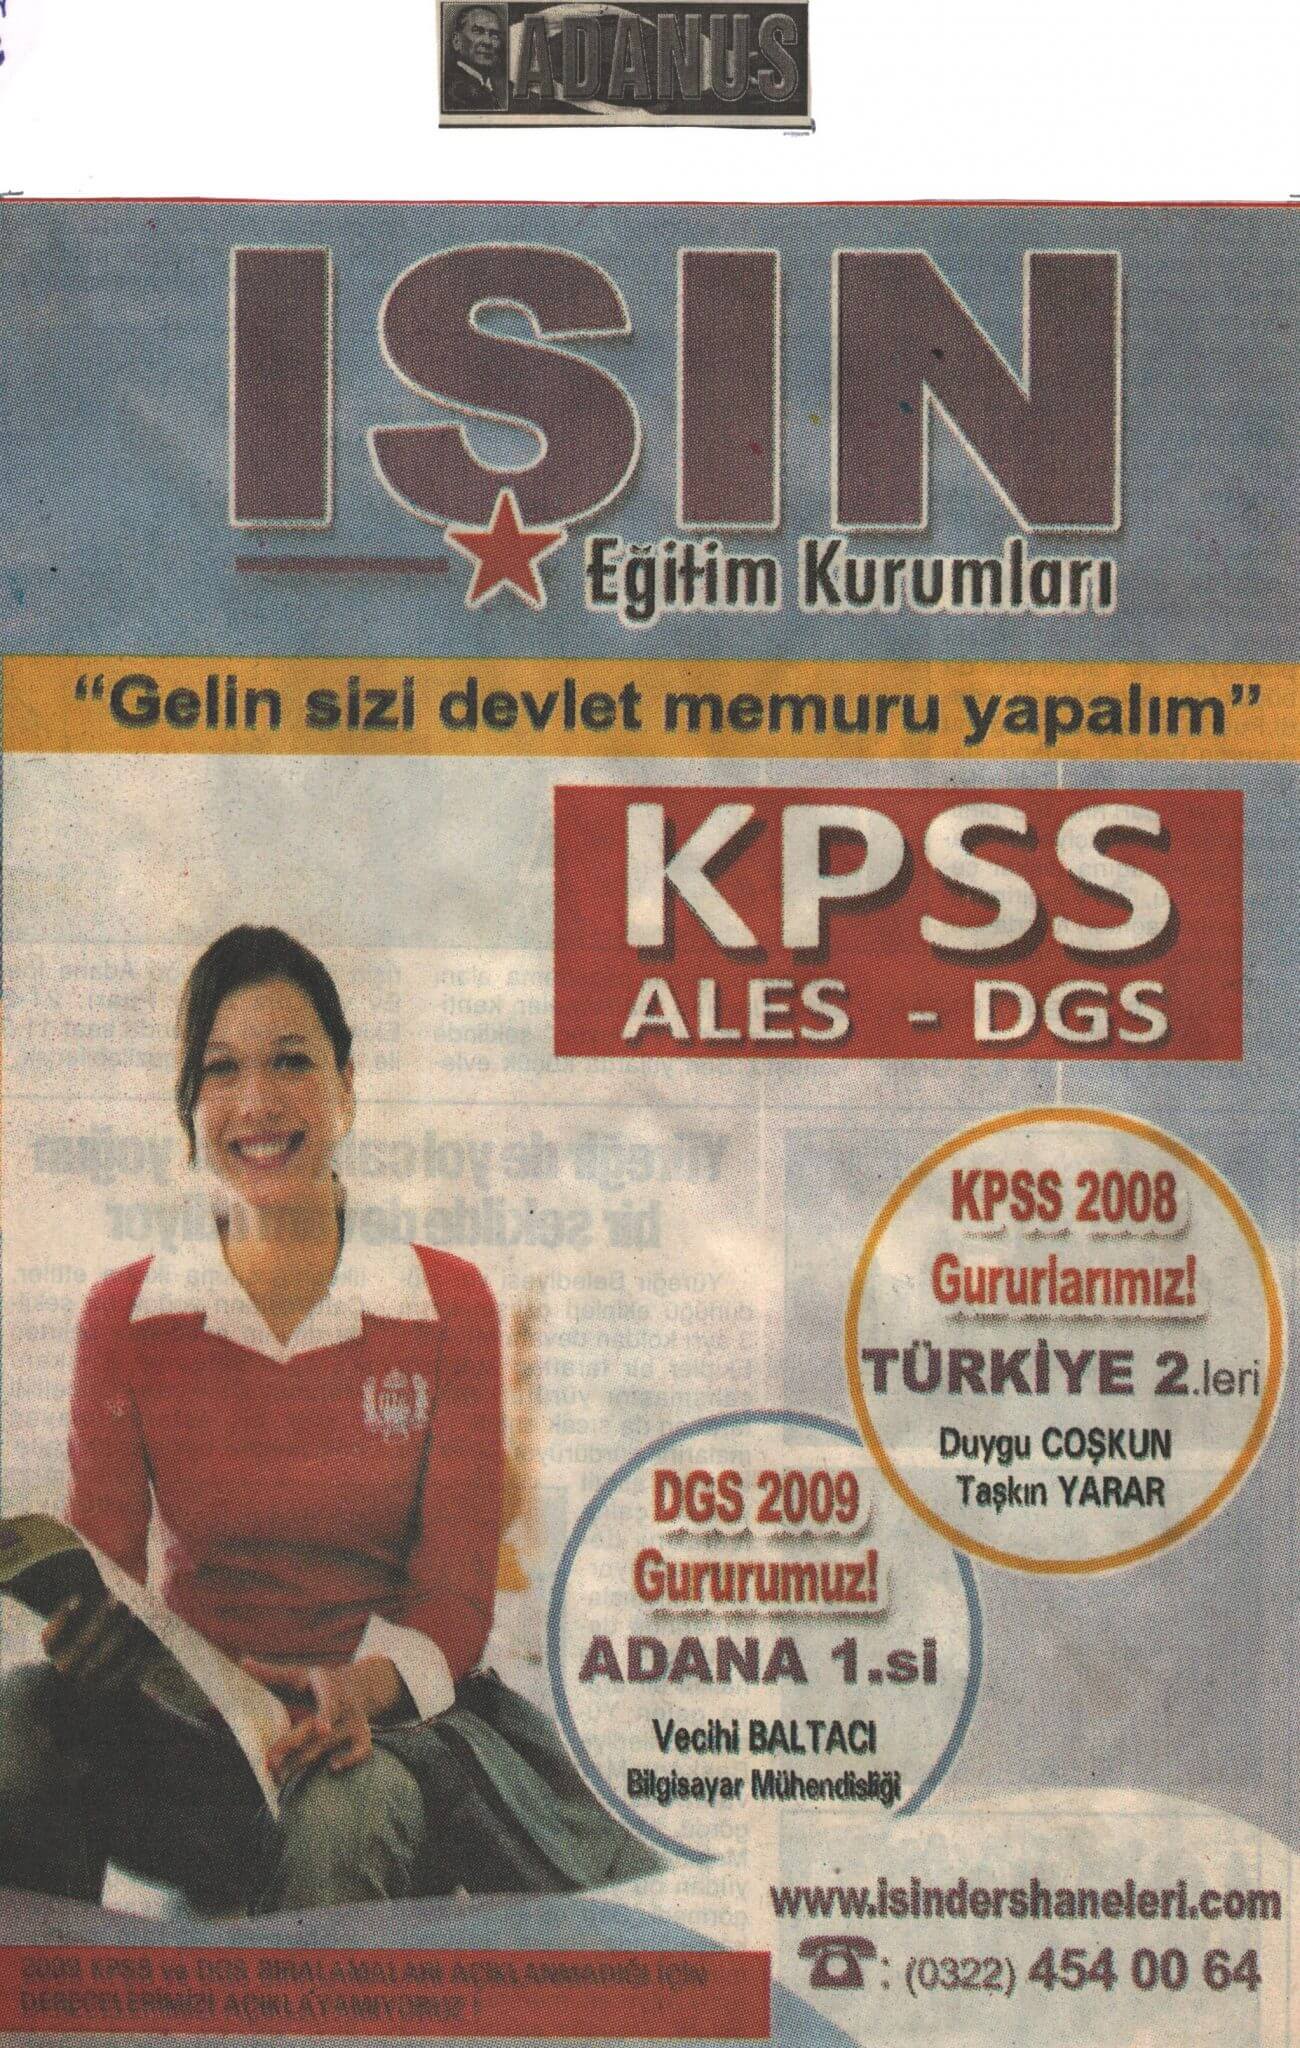 Adanus Gazetesi